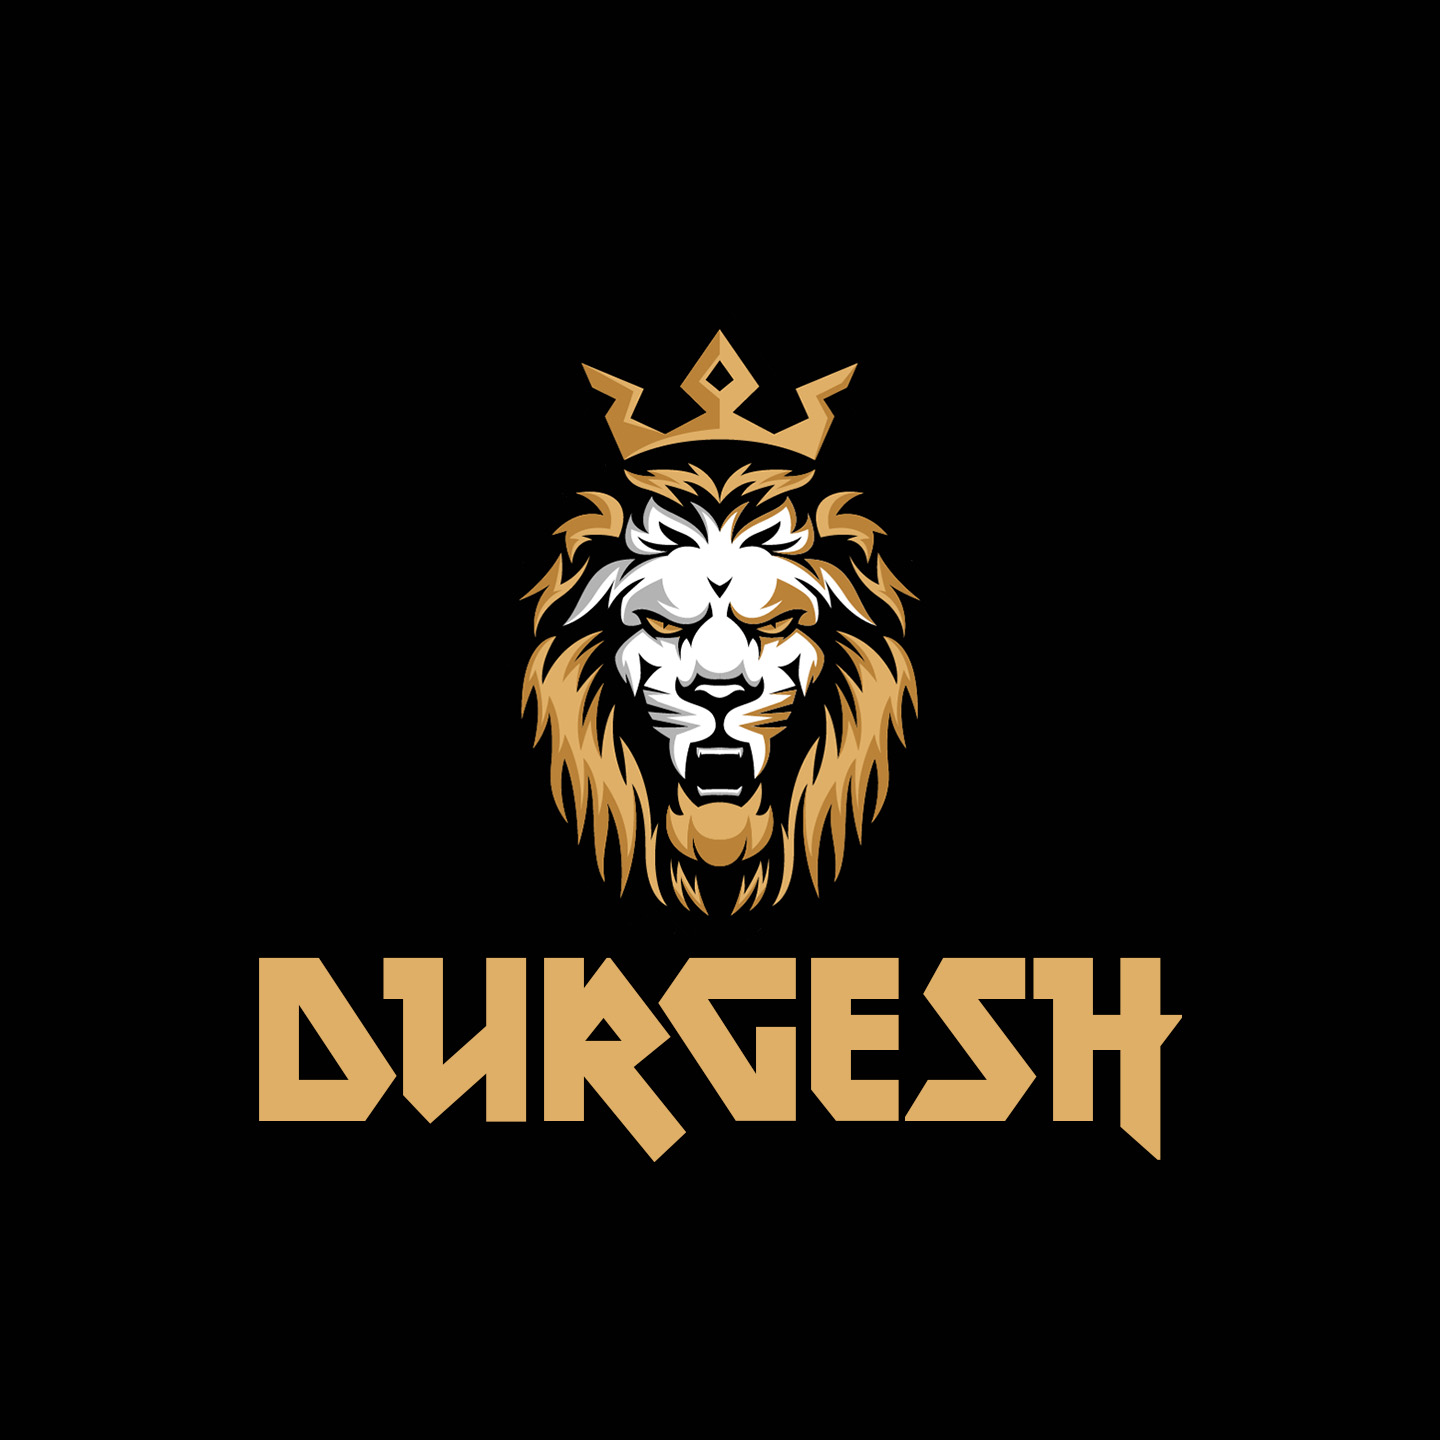 Durgesh. wani's Profile and Image Gallery